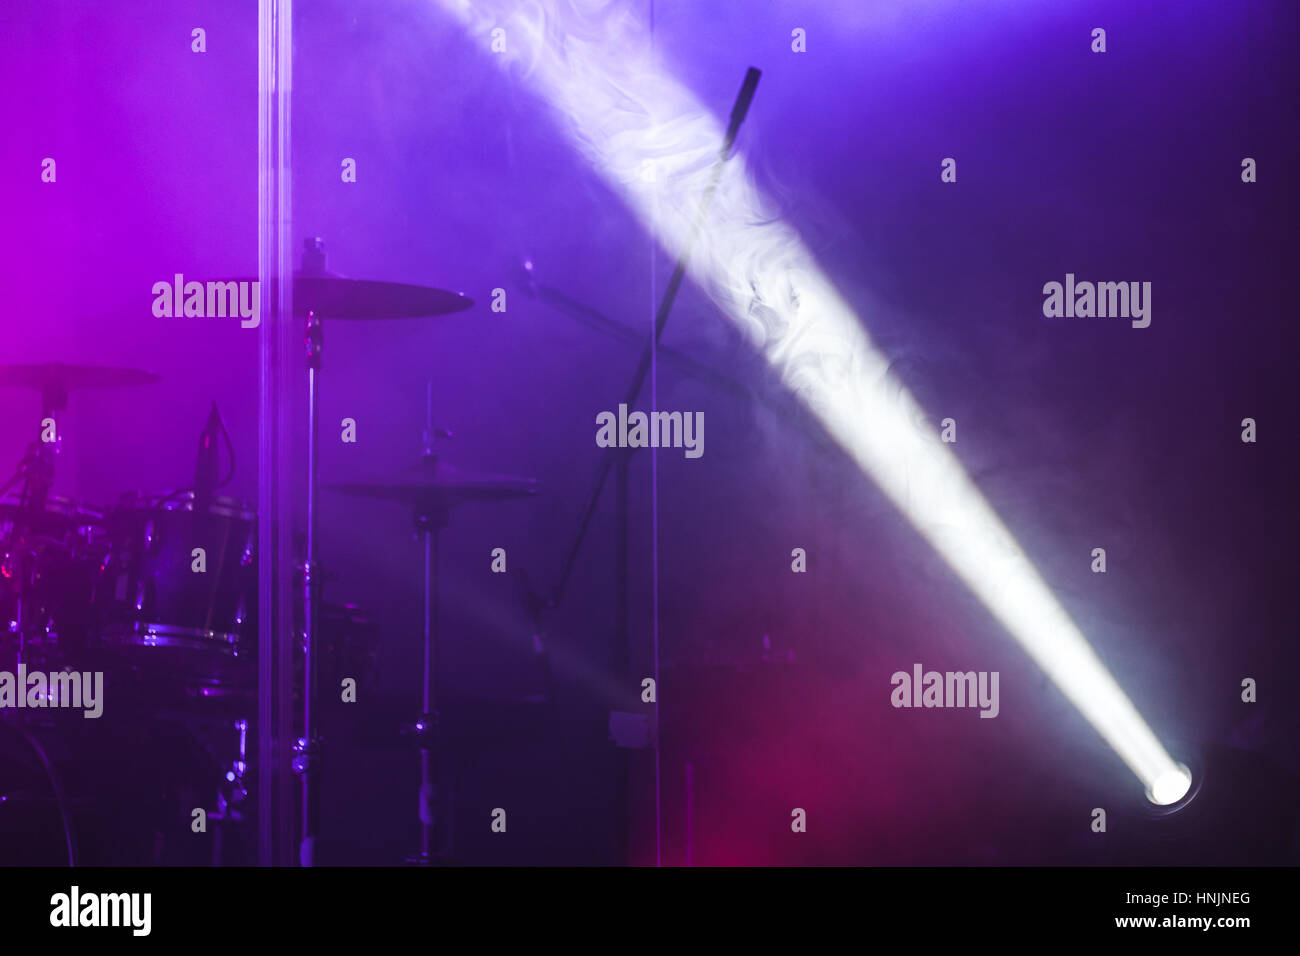 Ray of scenic spot light over blurred csenic background, stage illumination equipment Stock Photo